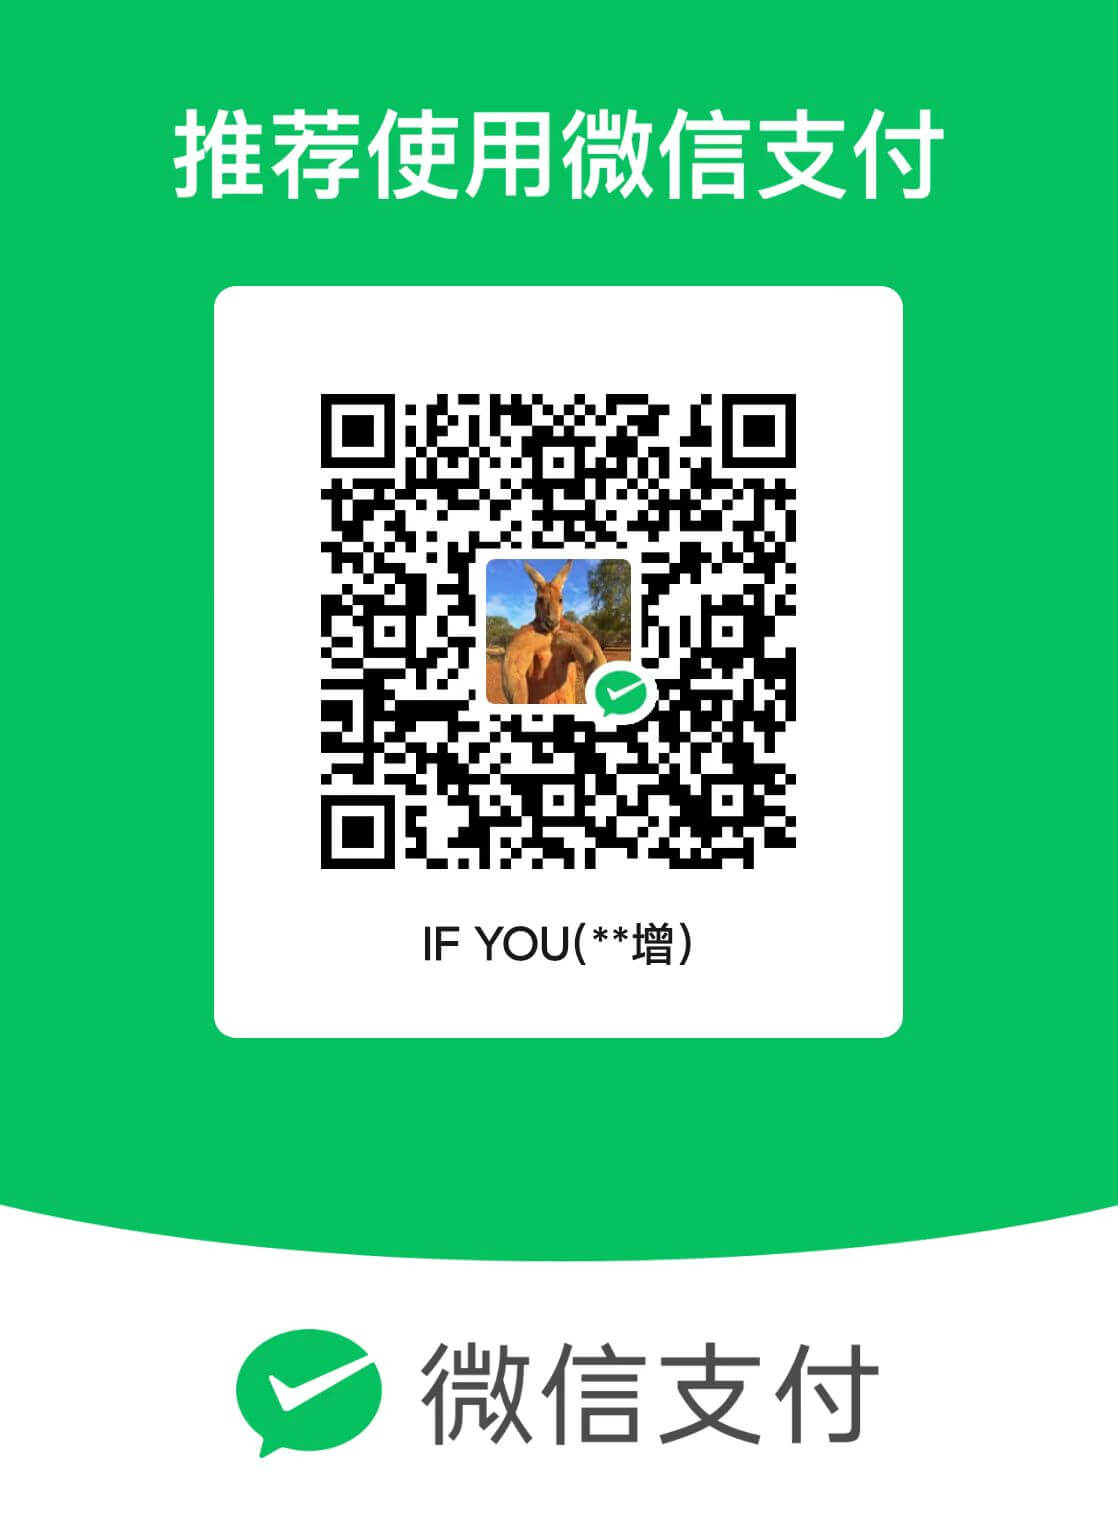 WeChat Pay QR Code